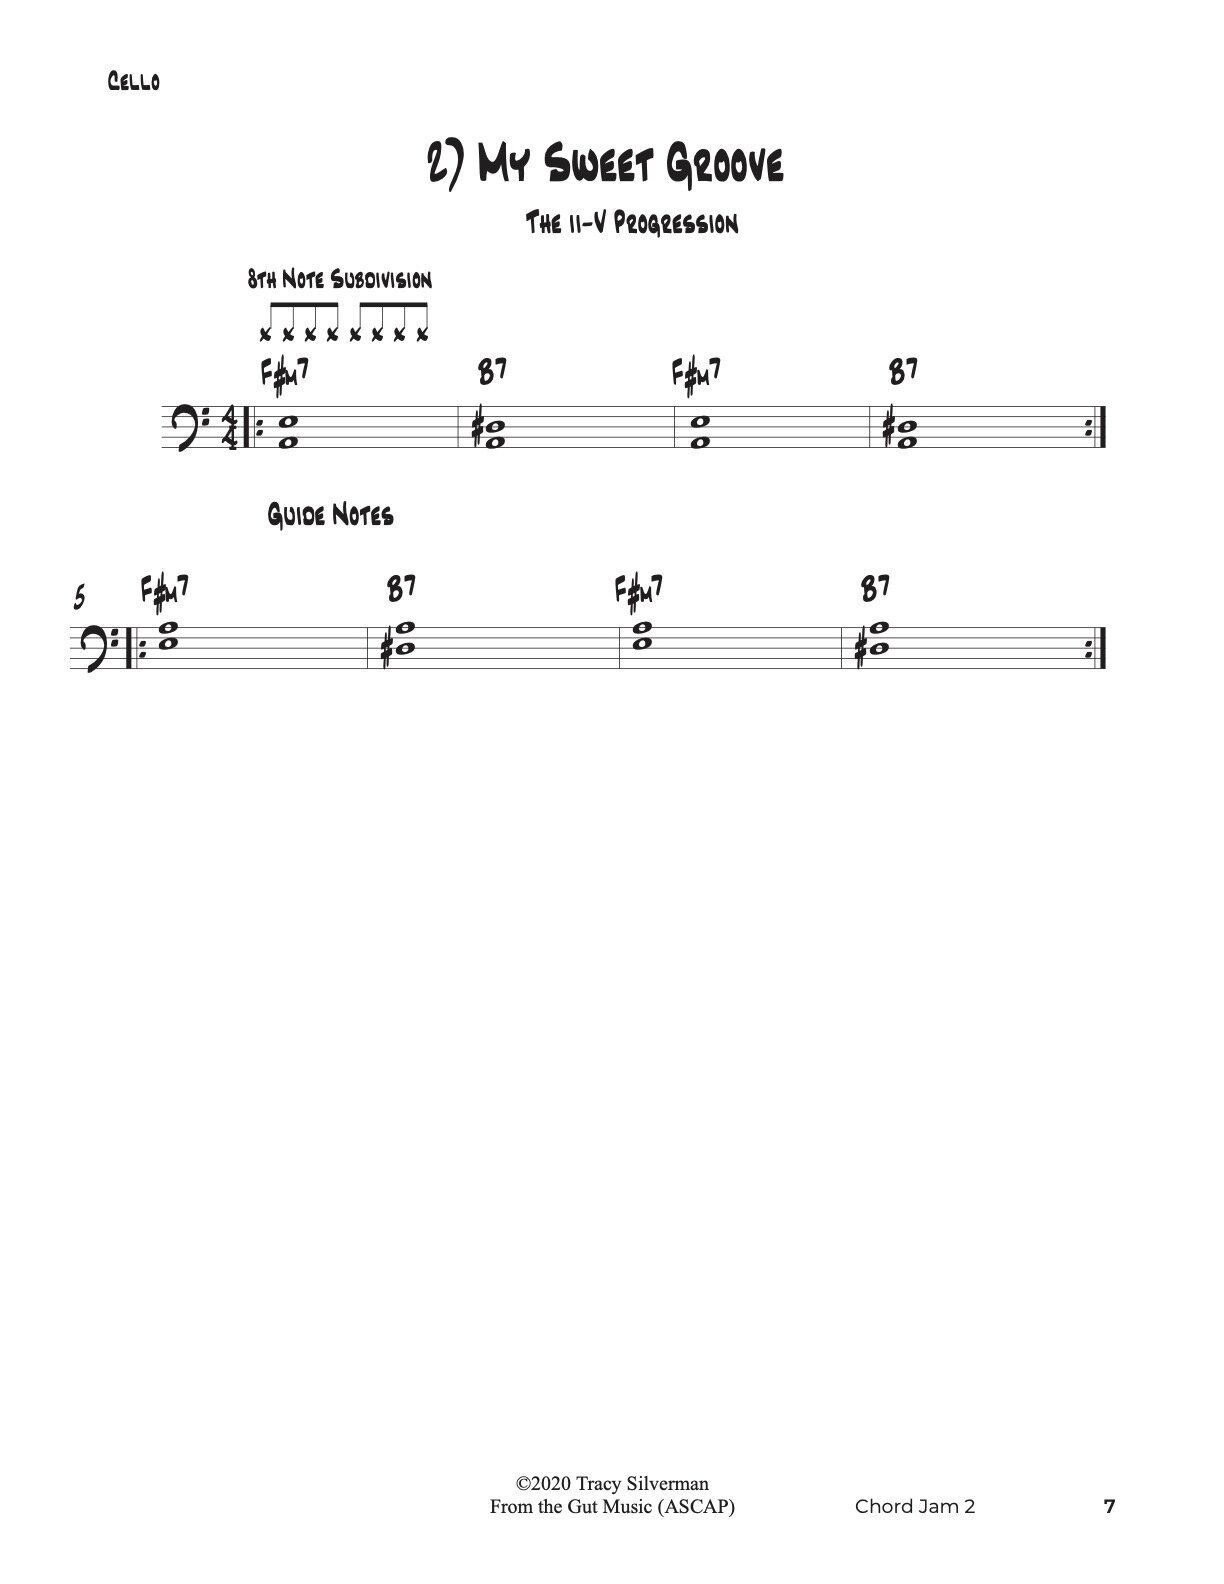 ChordJams-Cello-Print-Dec2020 copy.jpg